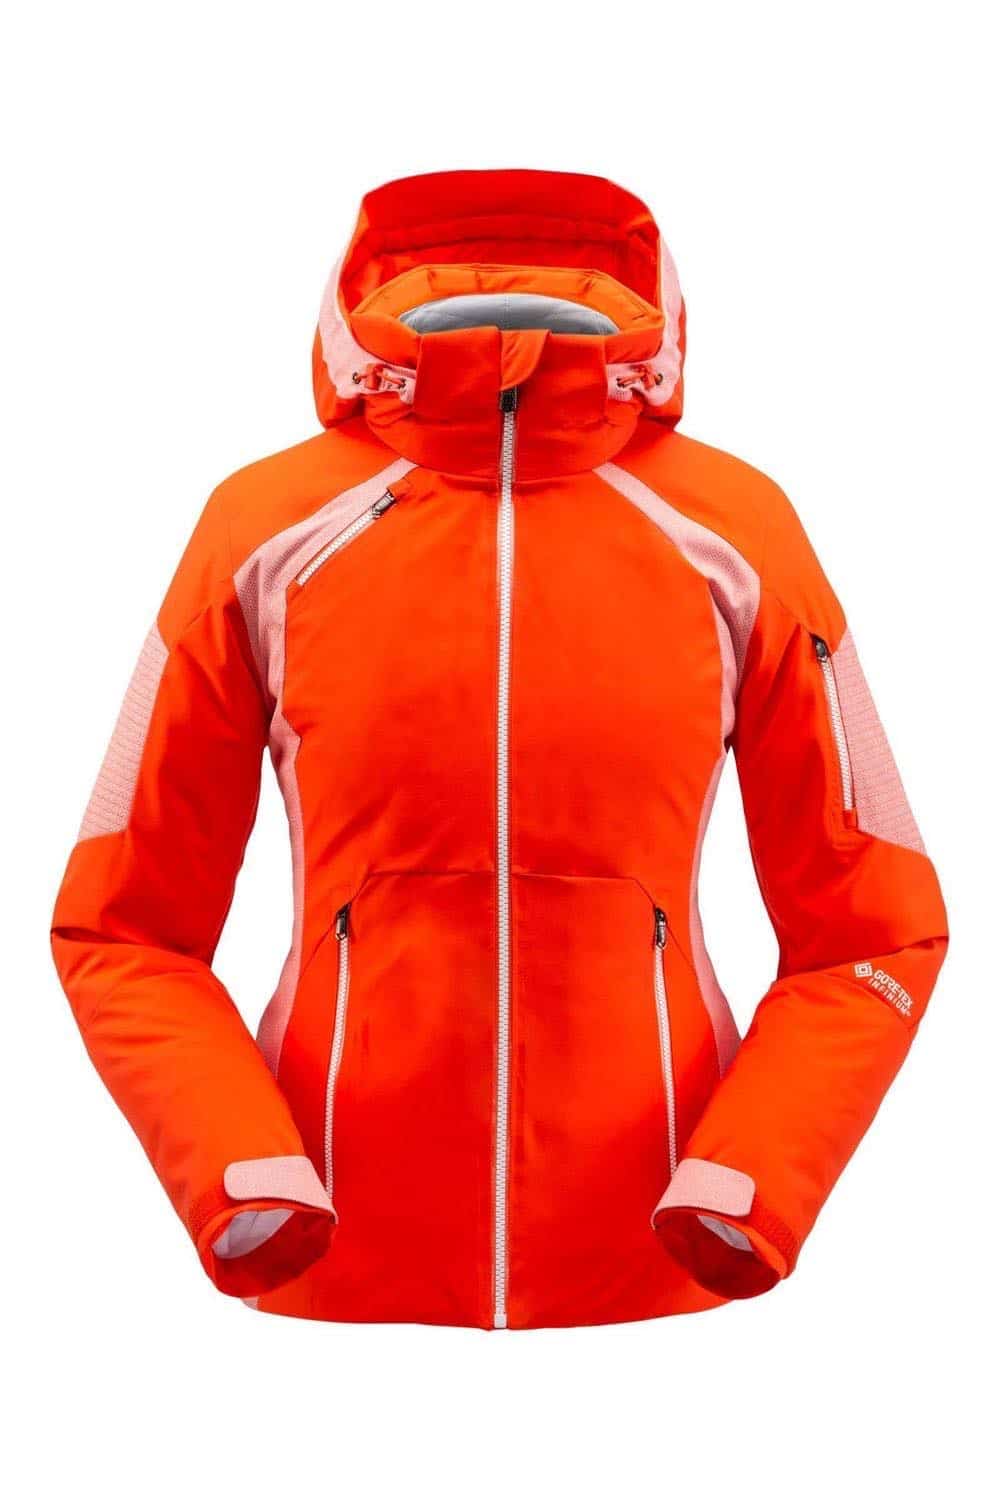 Veste Ski SPYDER Schatzi Infinium Jacket Women